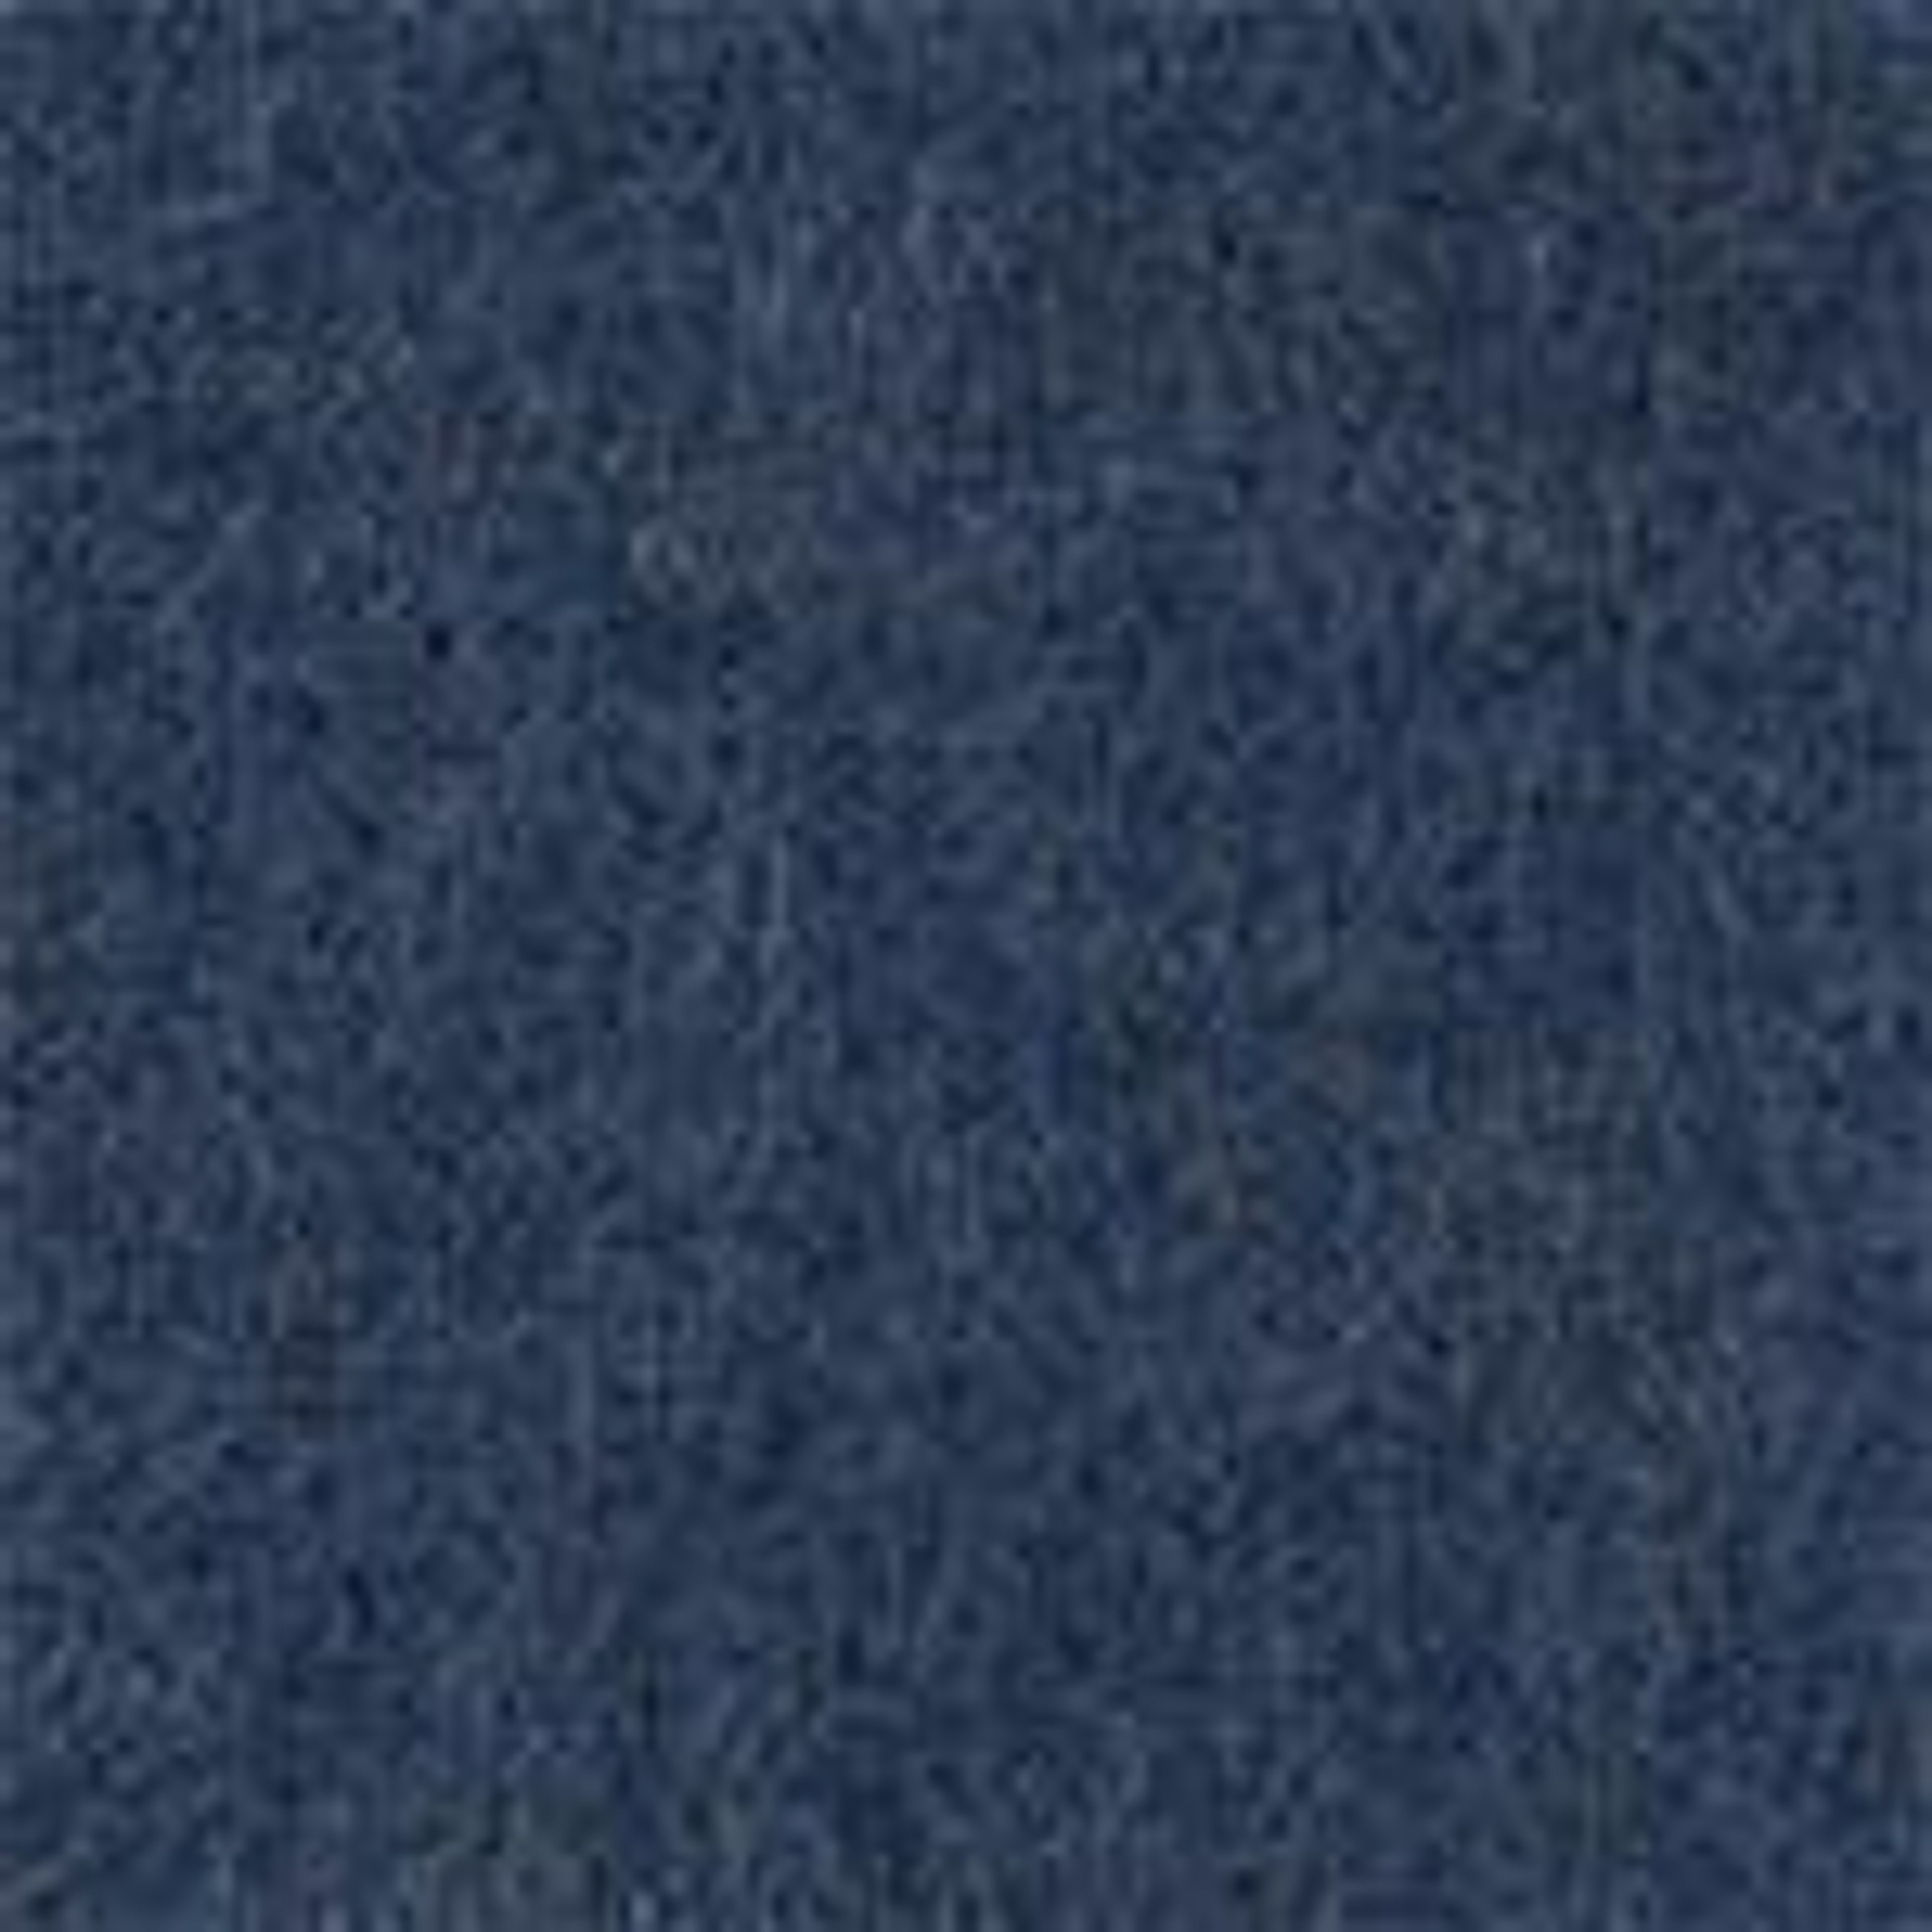 Arica Alpaca Blanket [Denim blue]